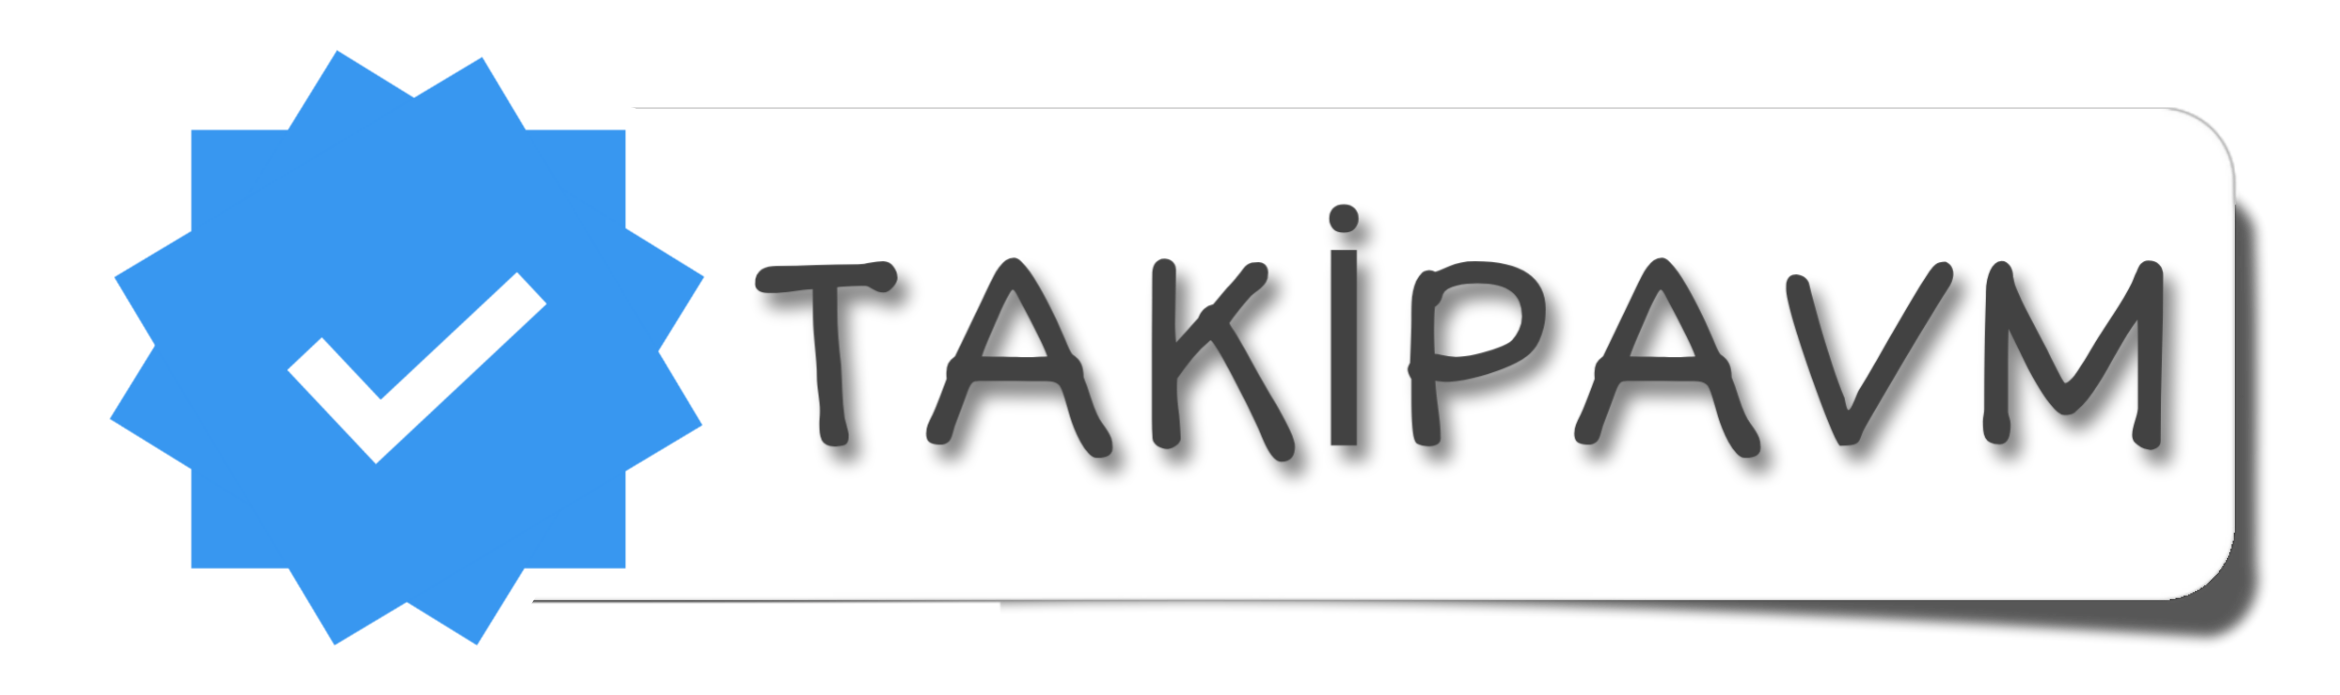 Takipavm.com